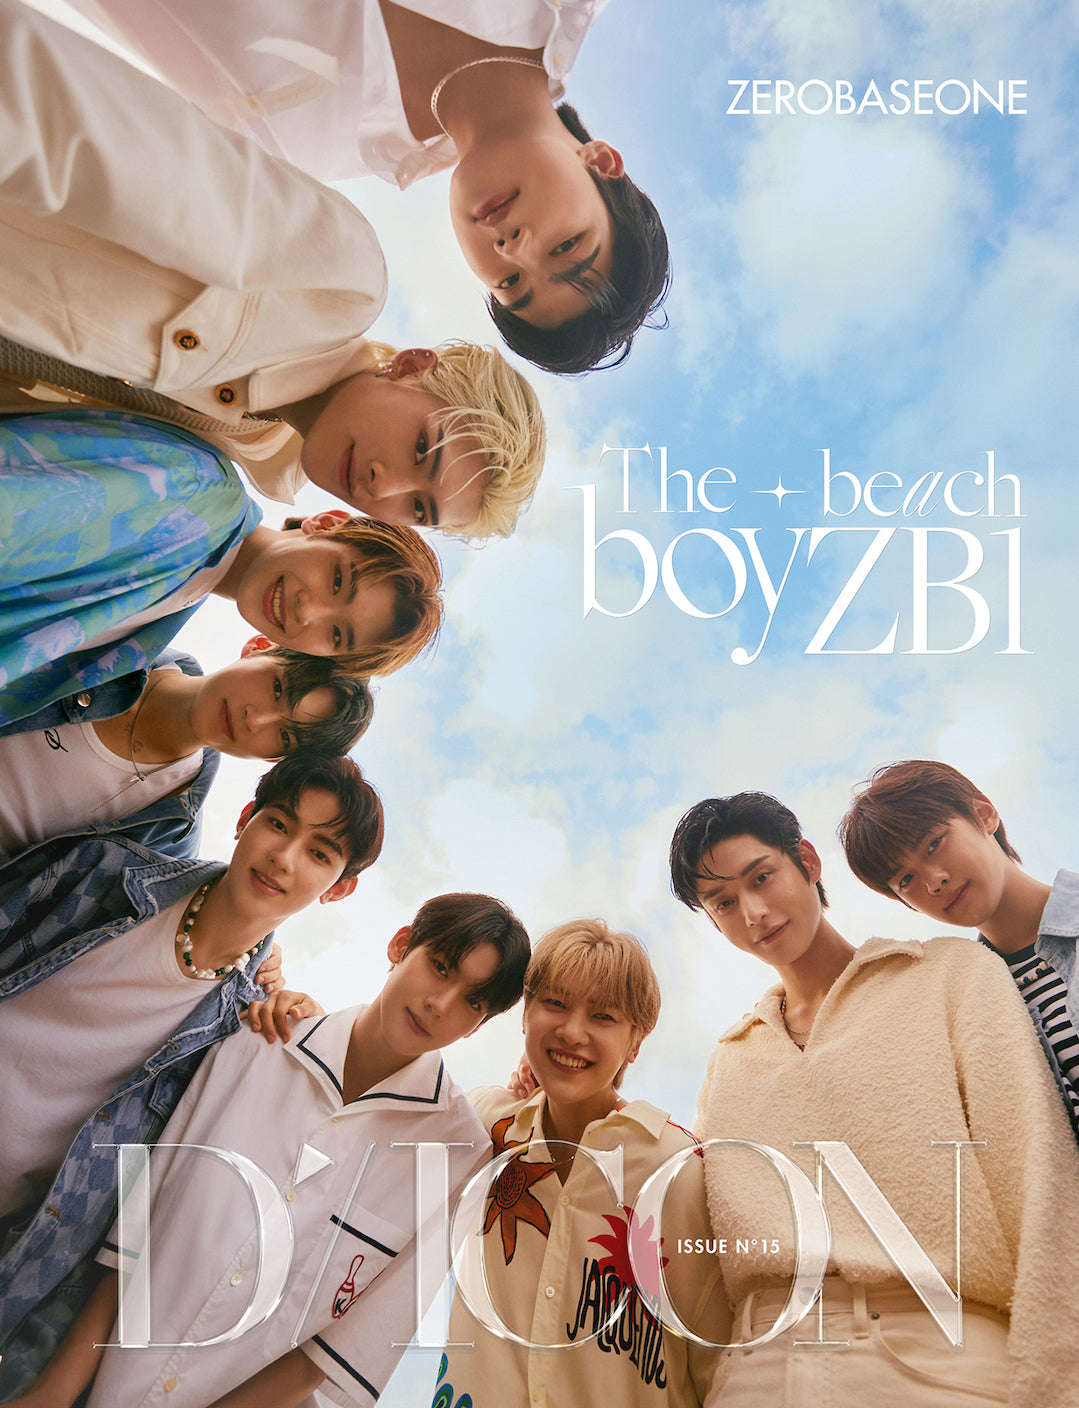 DICON ZEROBASEONE 「The beach boyZB1」 Group version